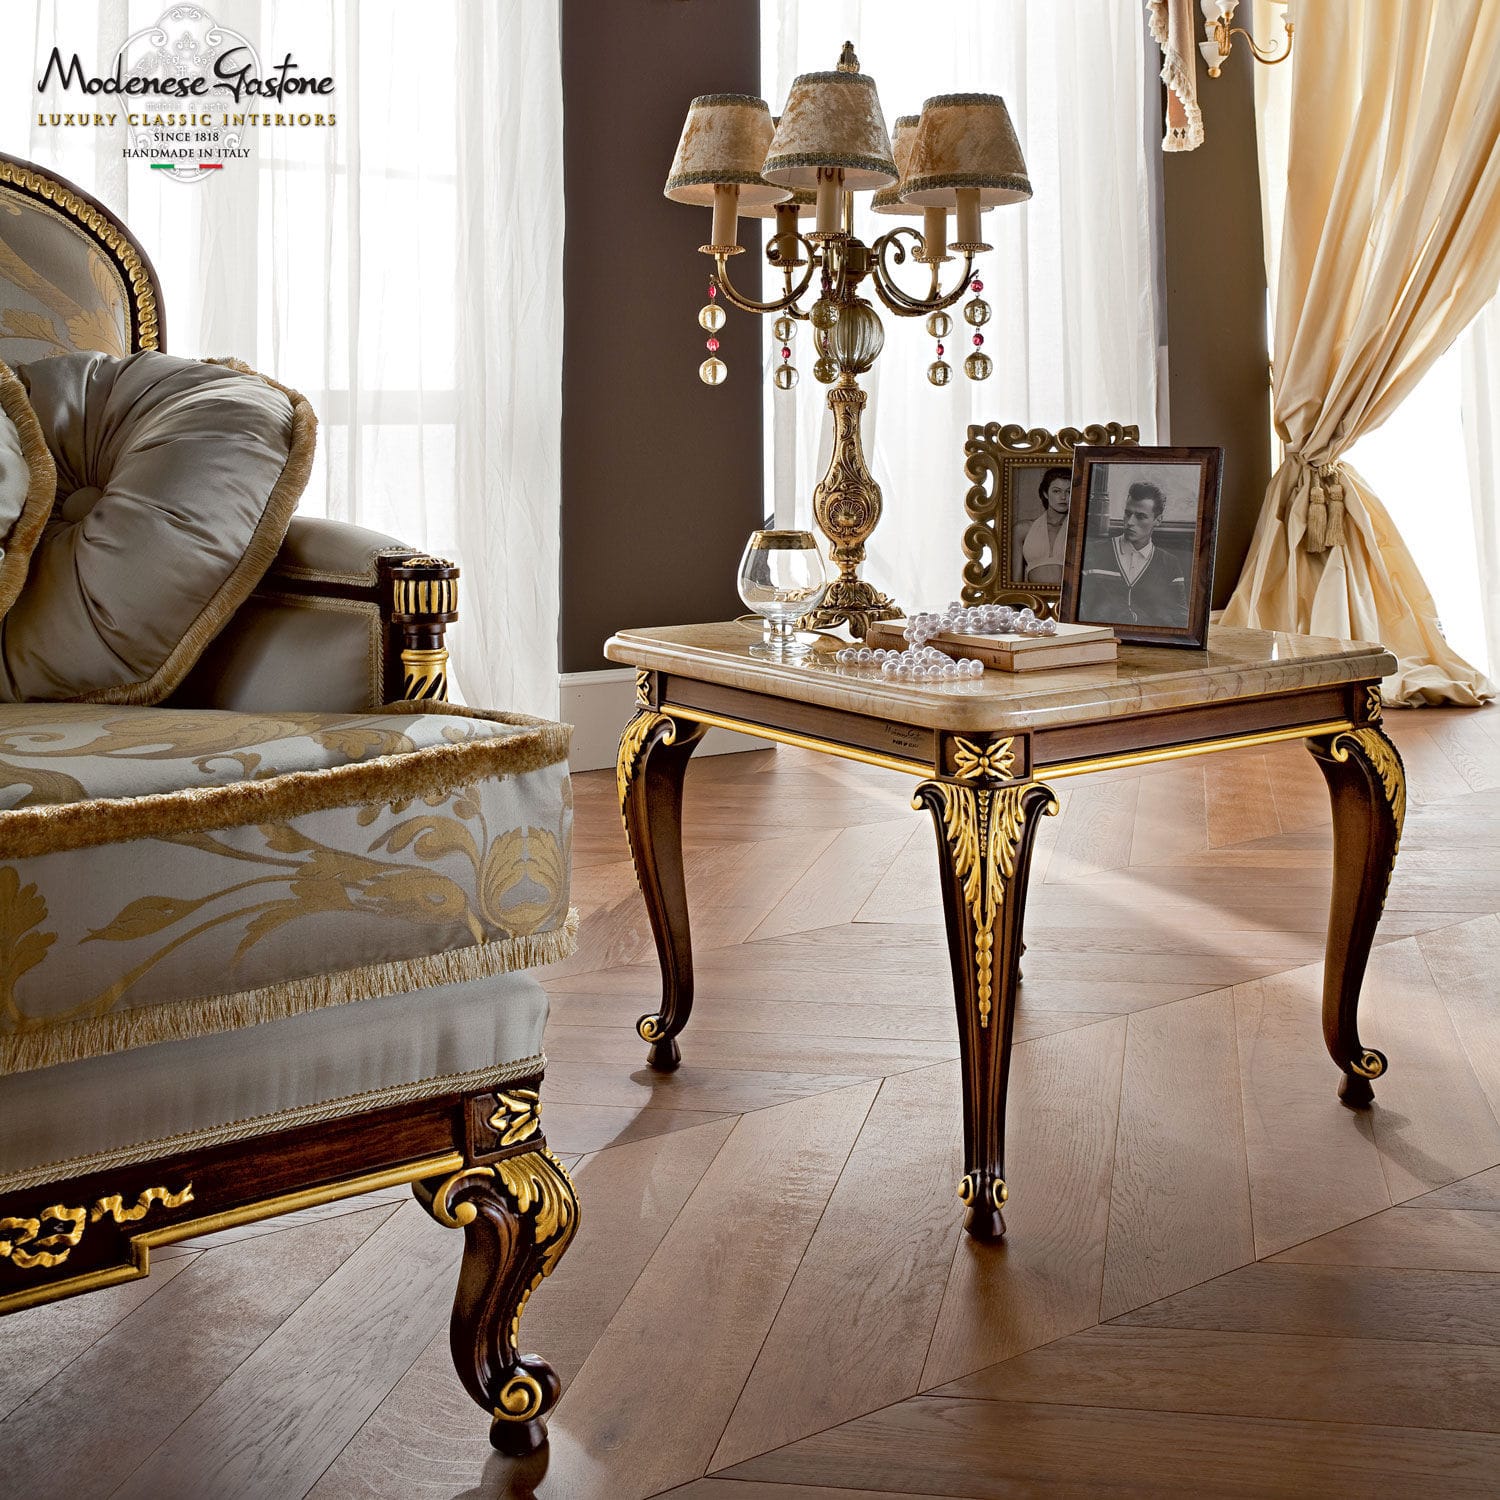 classic furniture ... classic side table / wooden / metal / marble casanova modenese gastone FXMHULL